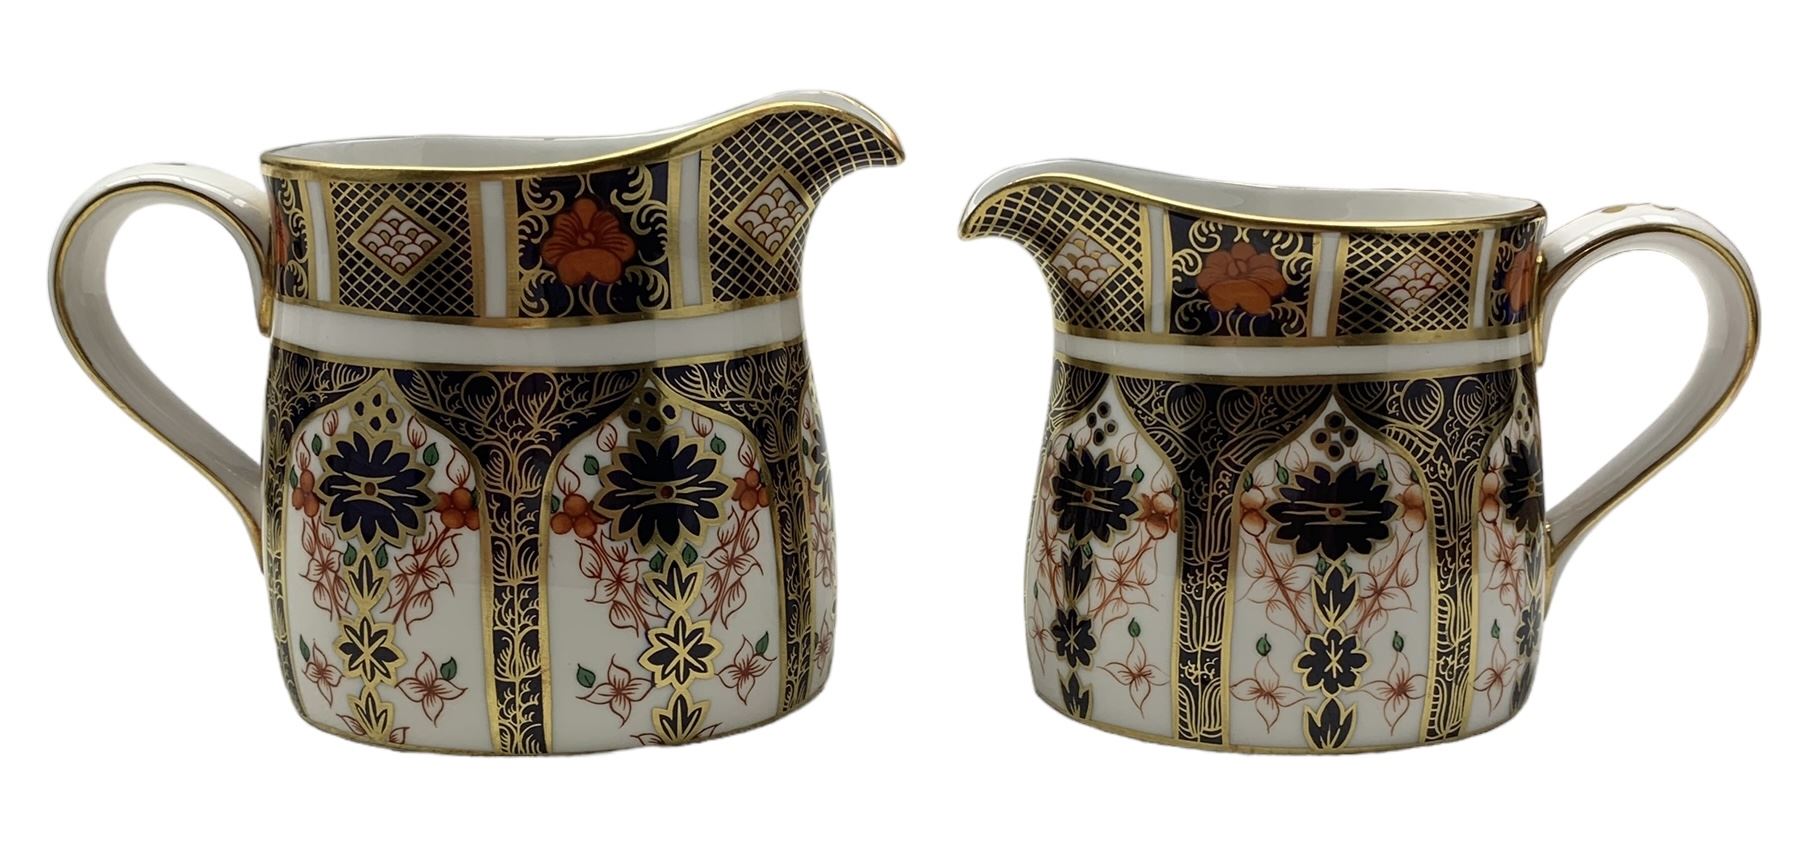 Royal Crown Derby Imari tea set no. 1128 comprising six teacups - Image 3 of 4